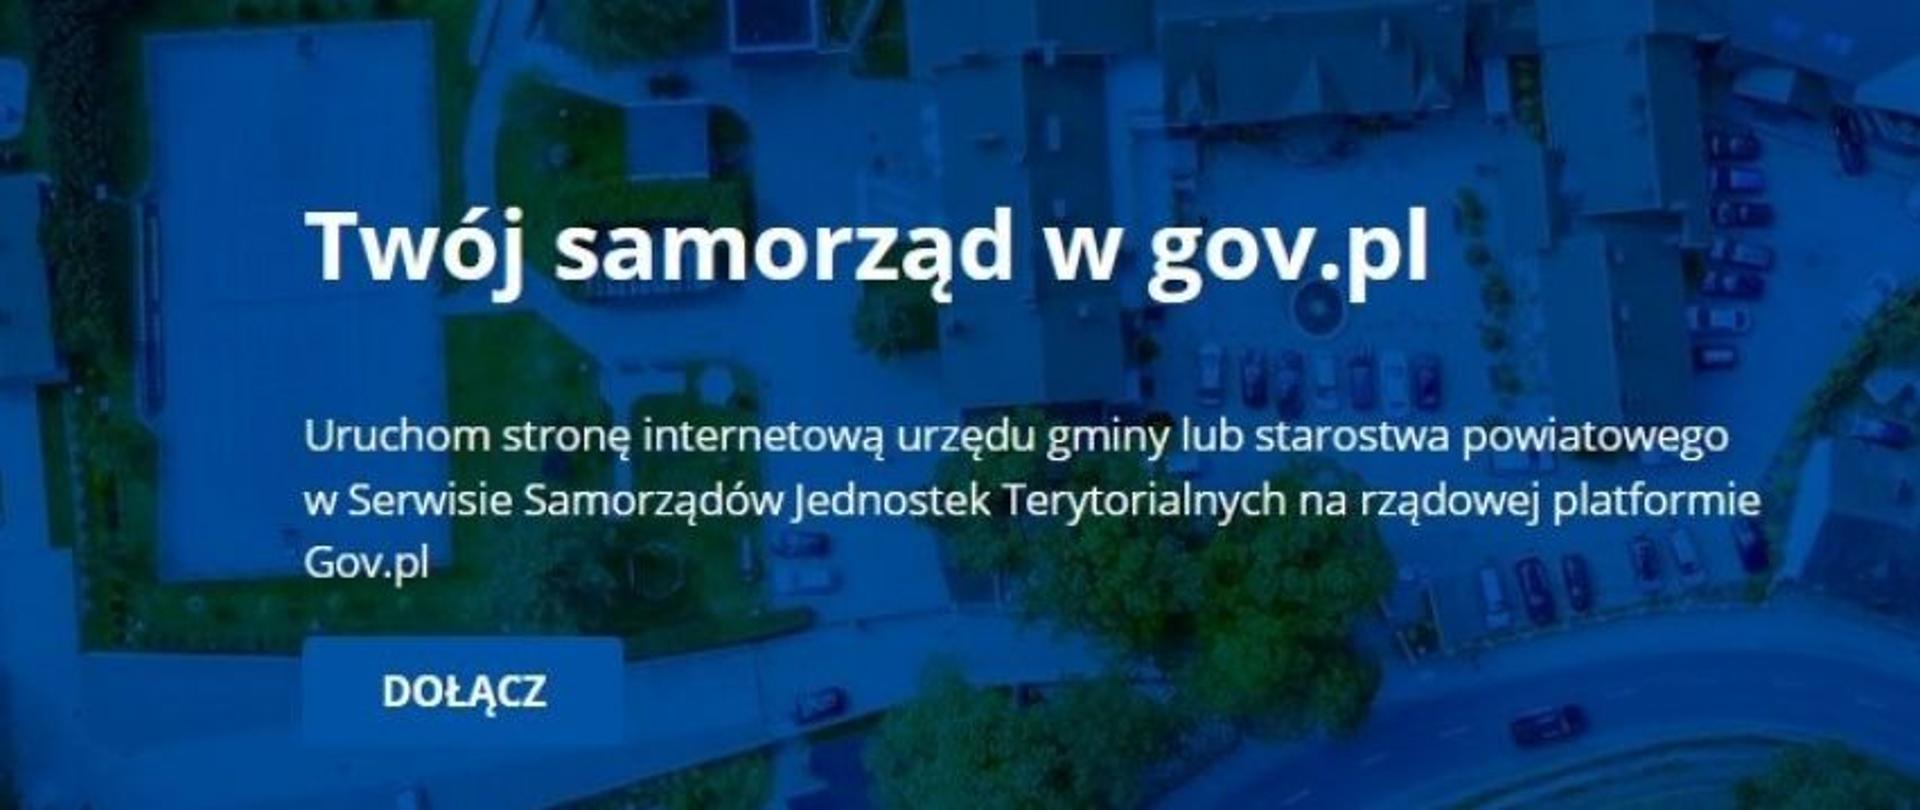 Nowy portal - samorzad.gov.pl 